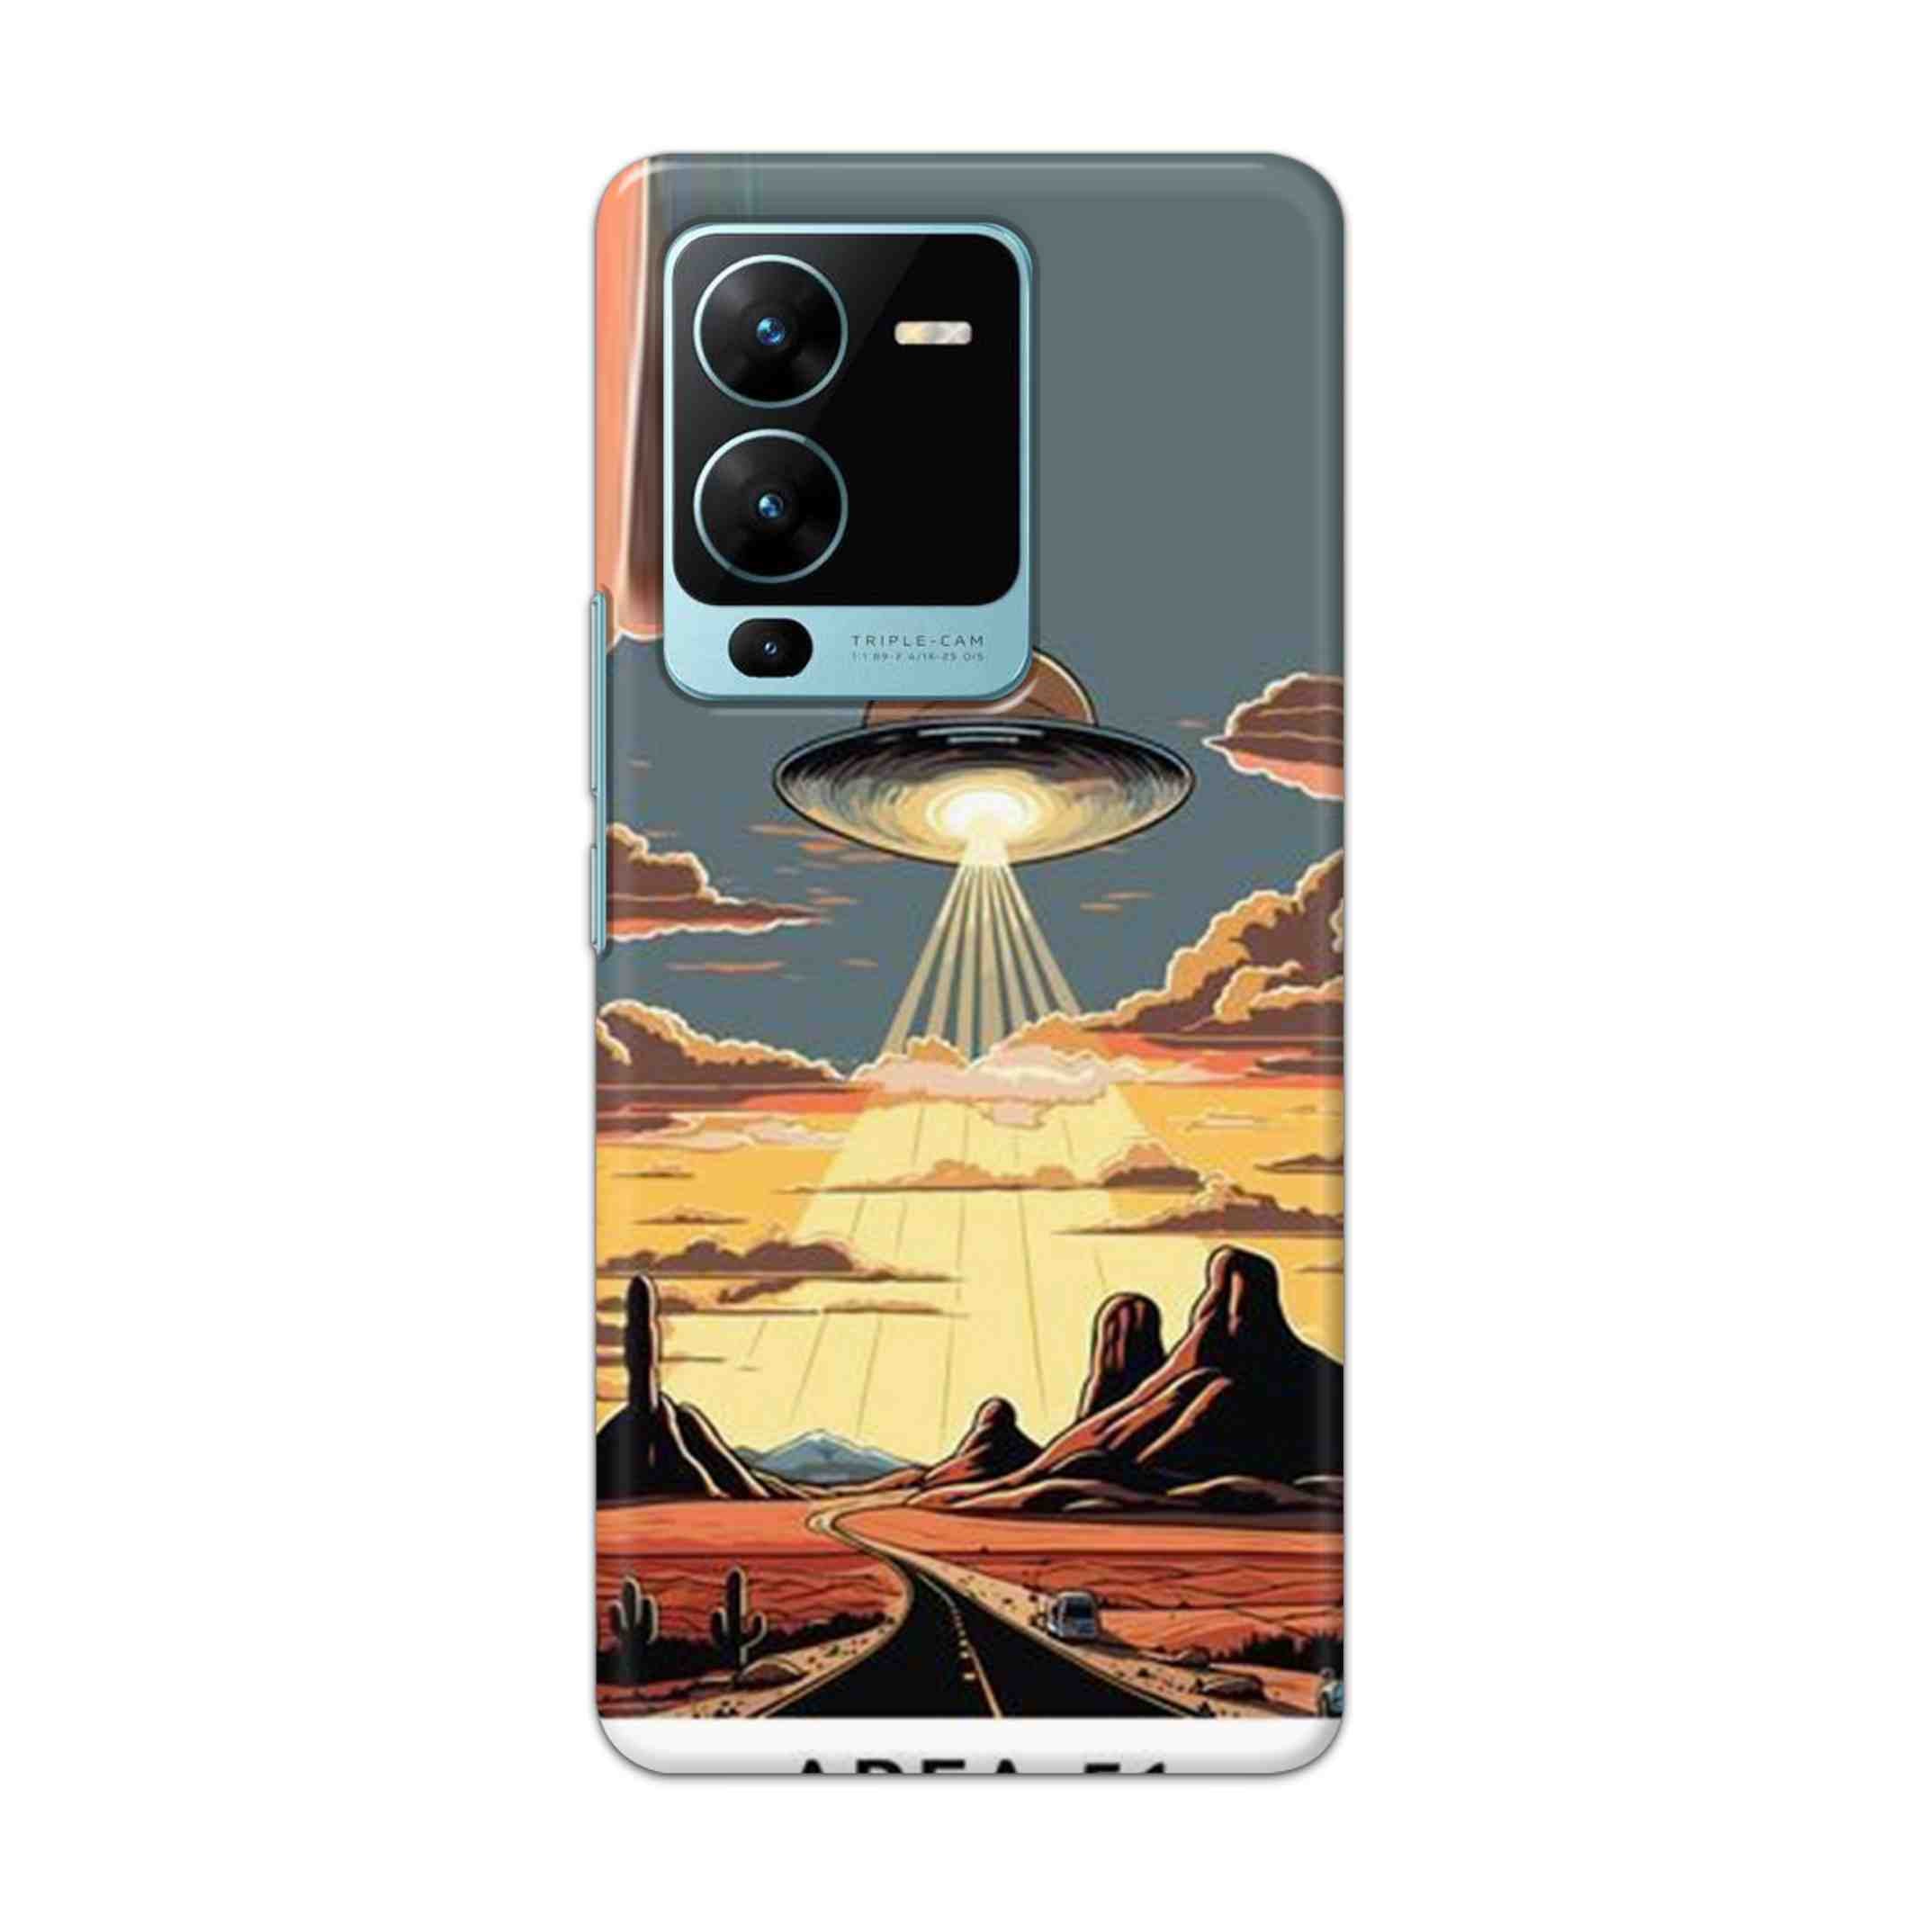 Buy Area 51 Hard Back Mobile Phone Case Cover For Vivo V25 Pro Online